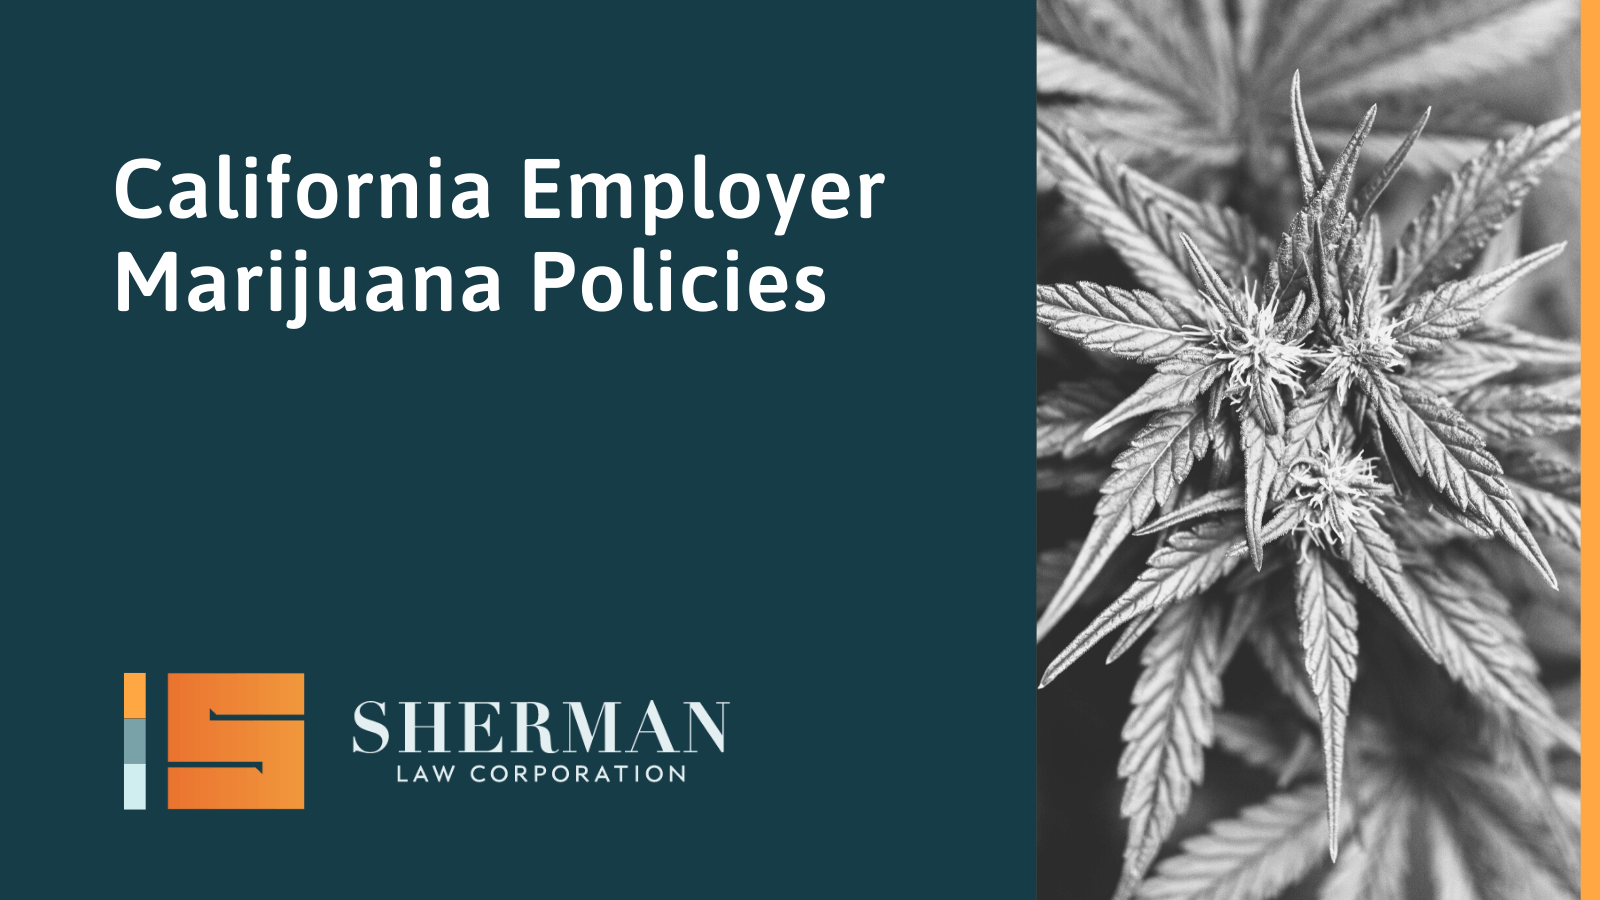 California Employer Marijuana Policies - sherman law corporation